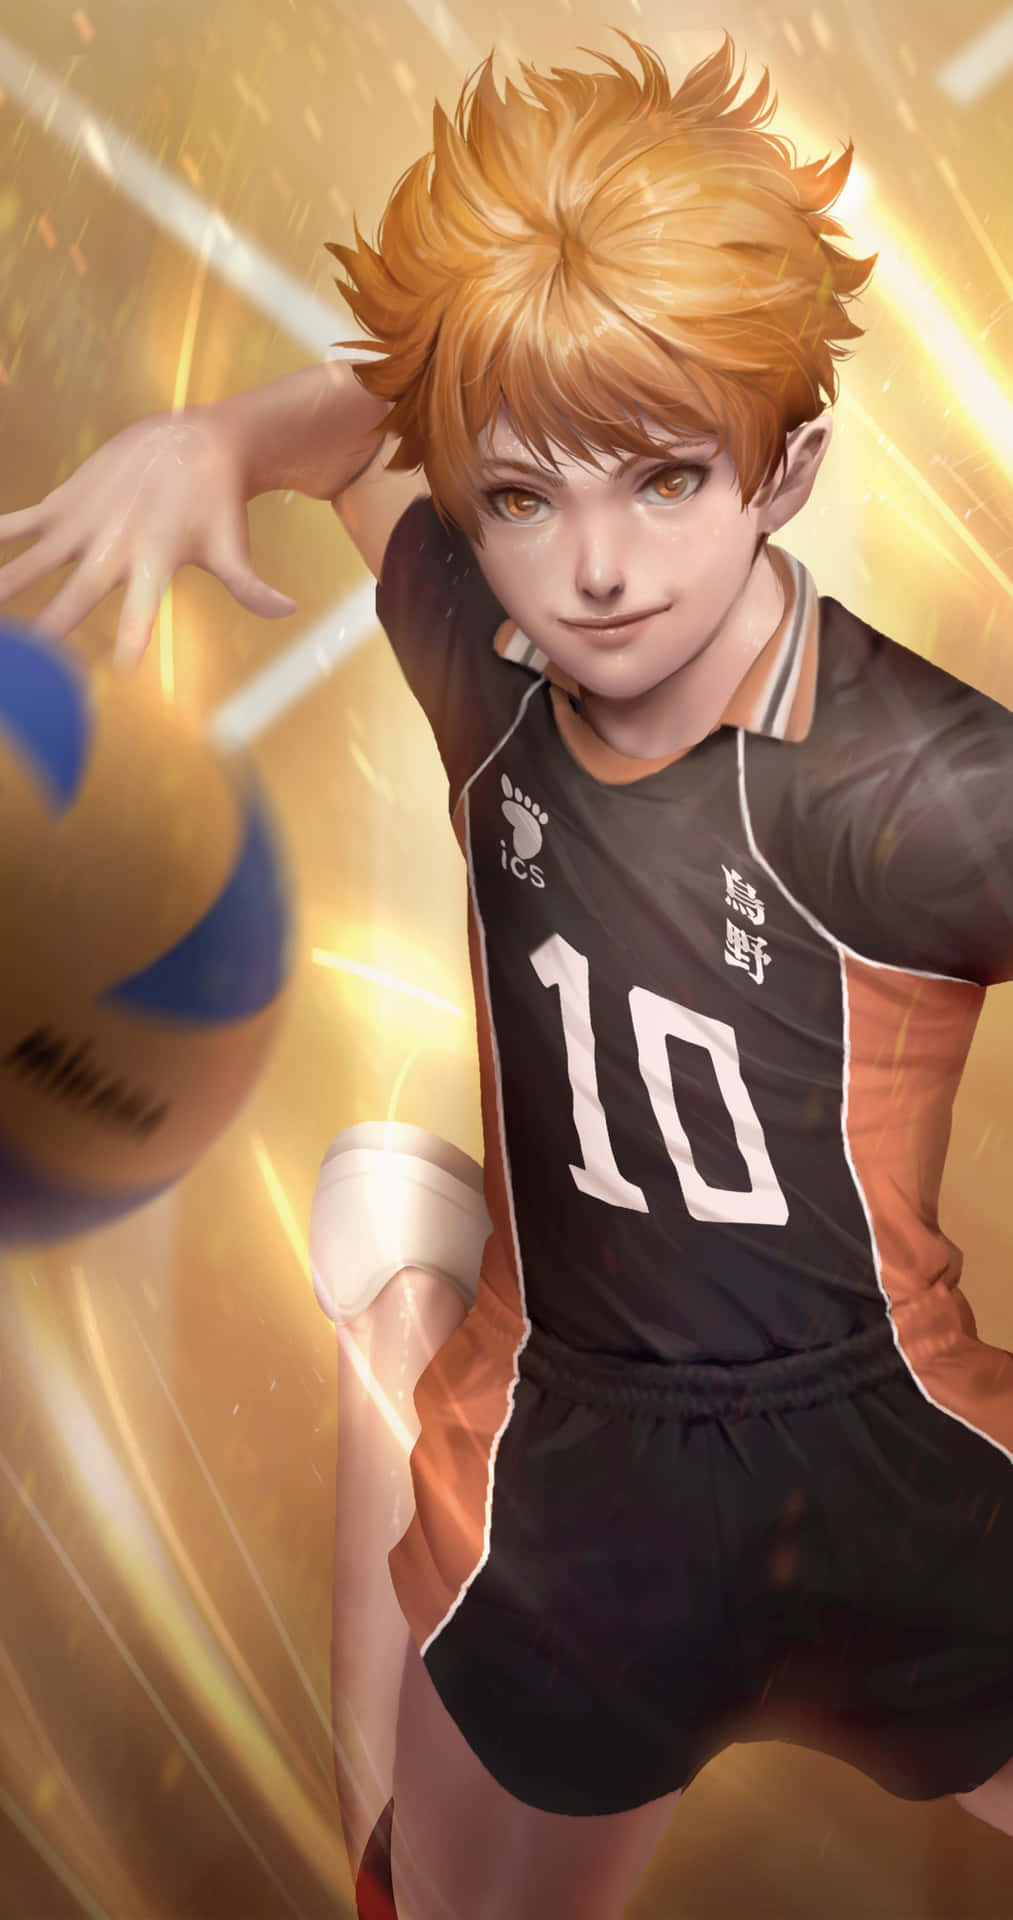 Haikyuu Anime Volleyball Action Wallpaper